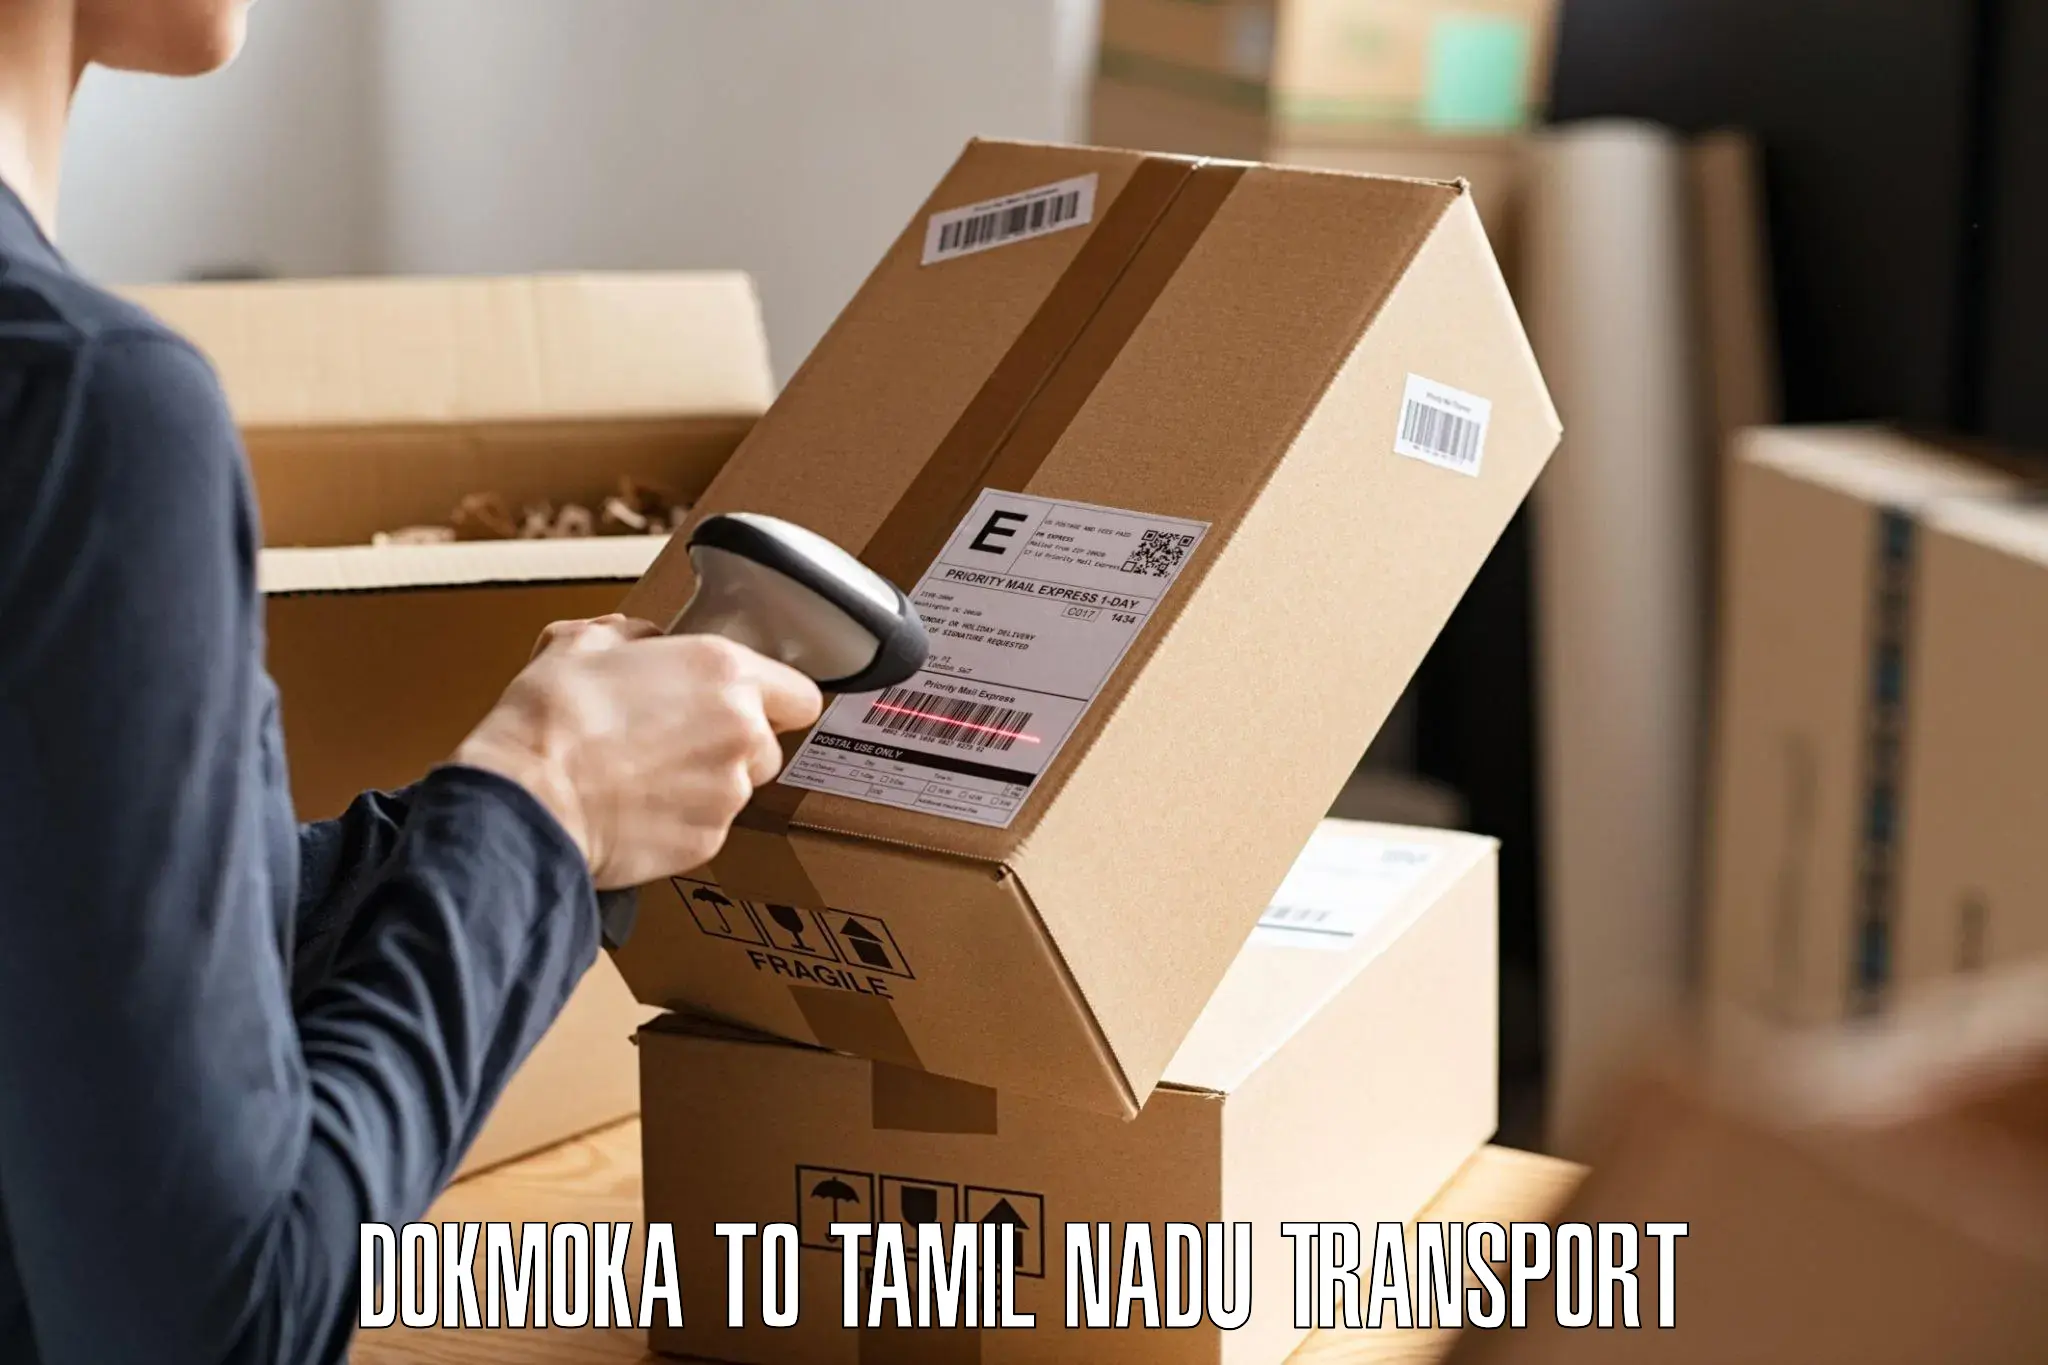 Material transport services Dokmoka to Nagapattinam